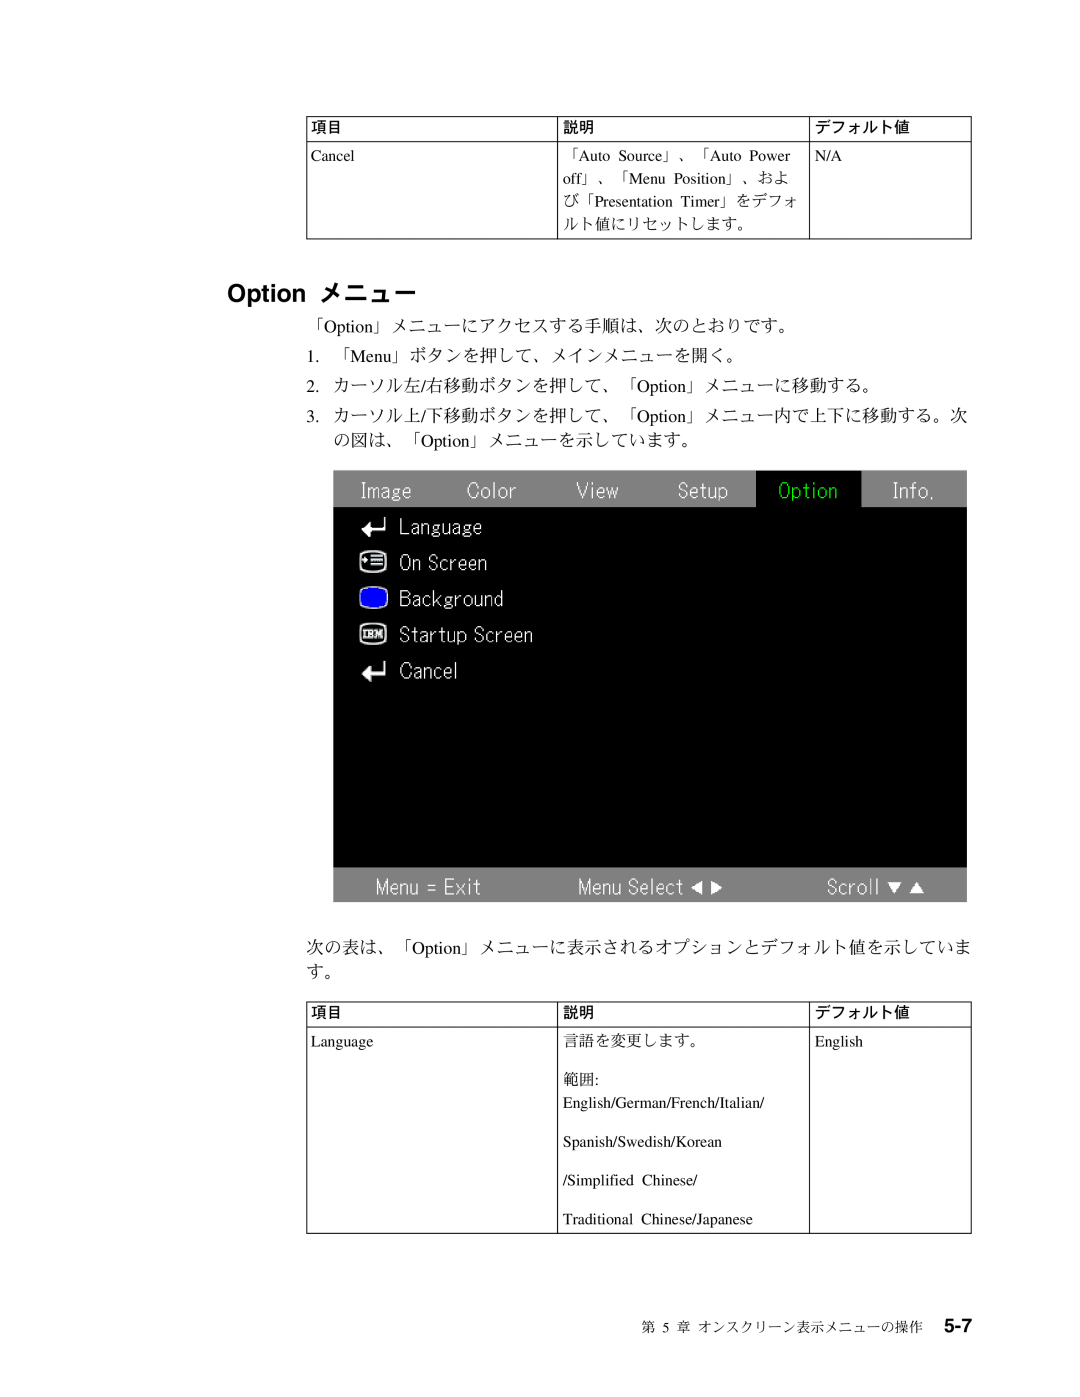 IBM M400 manual Option メニュー 